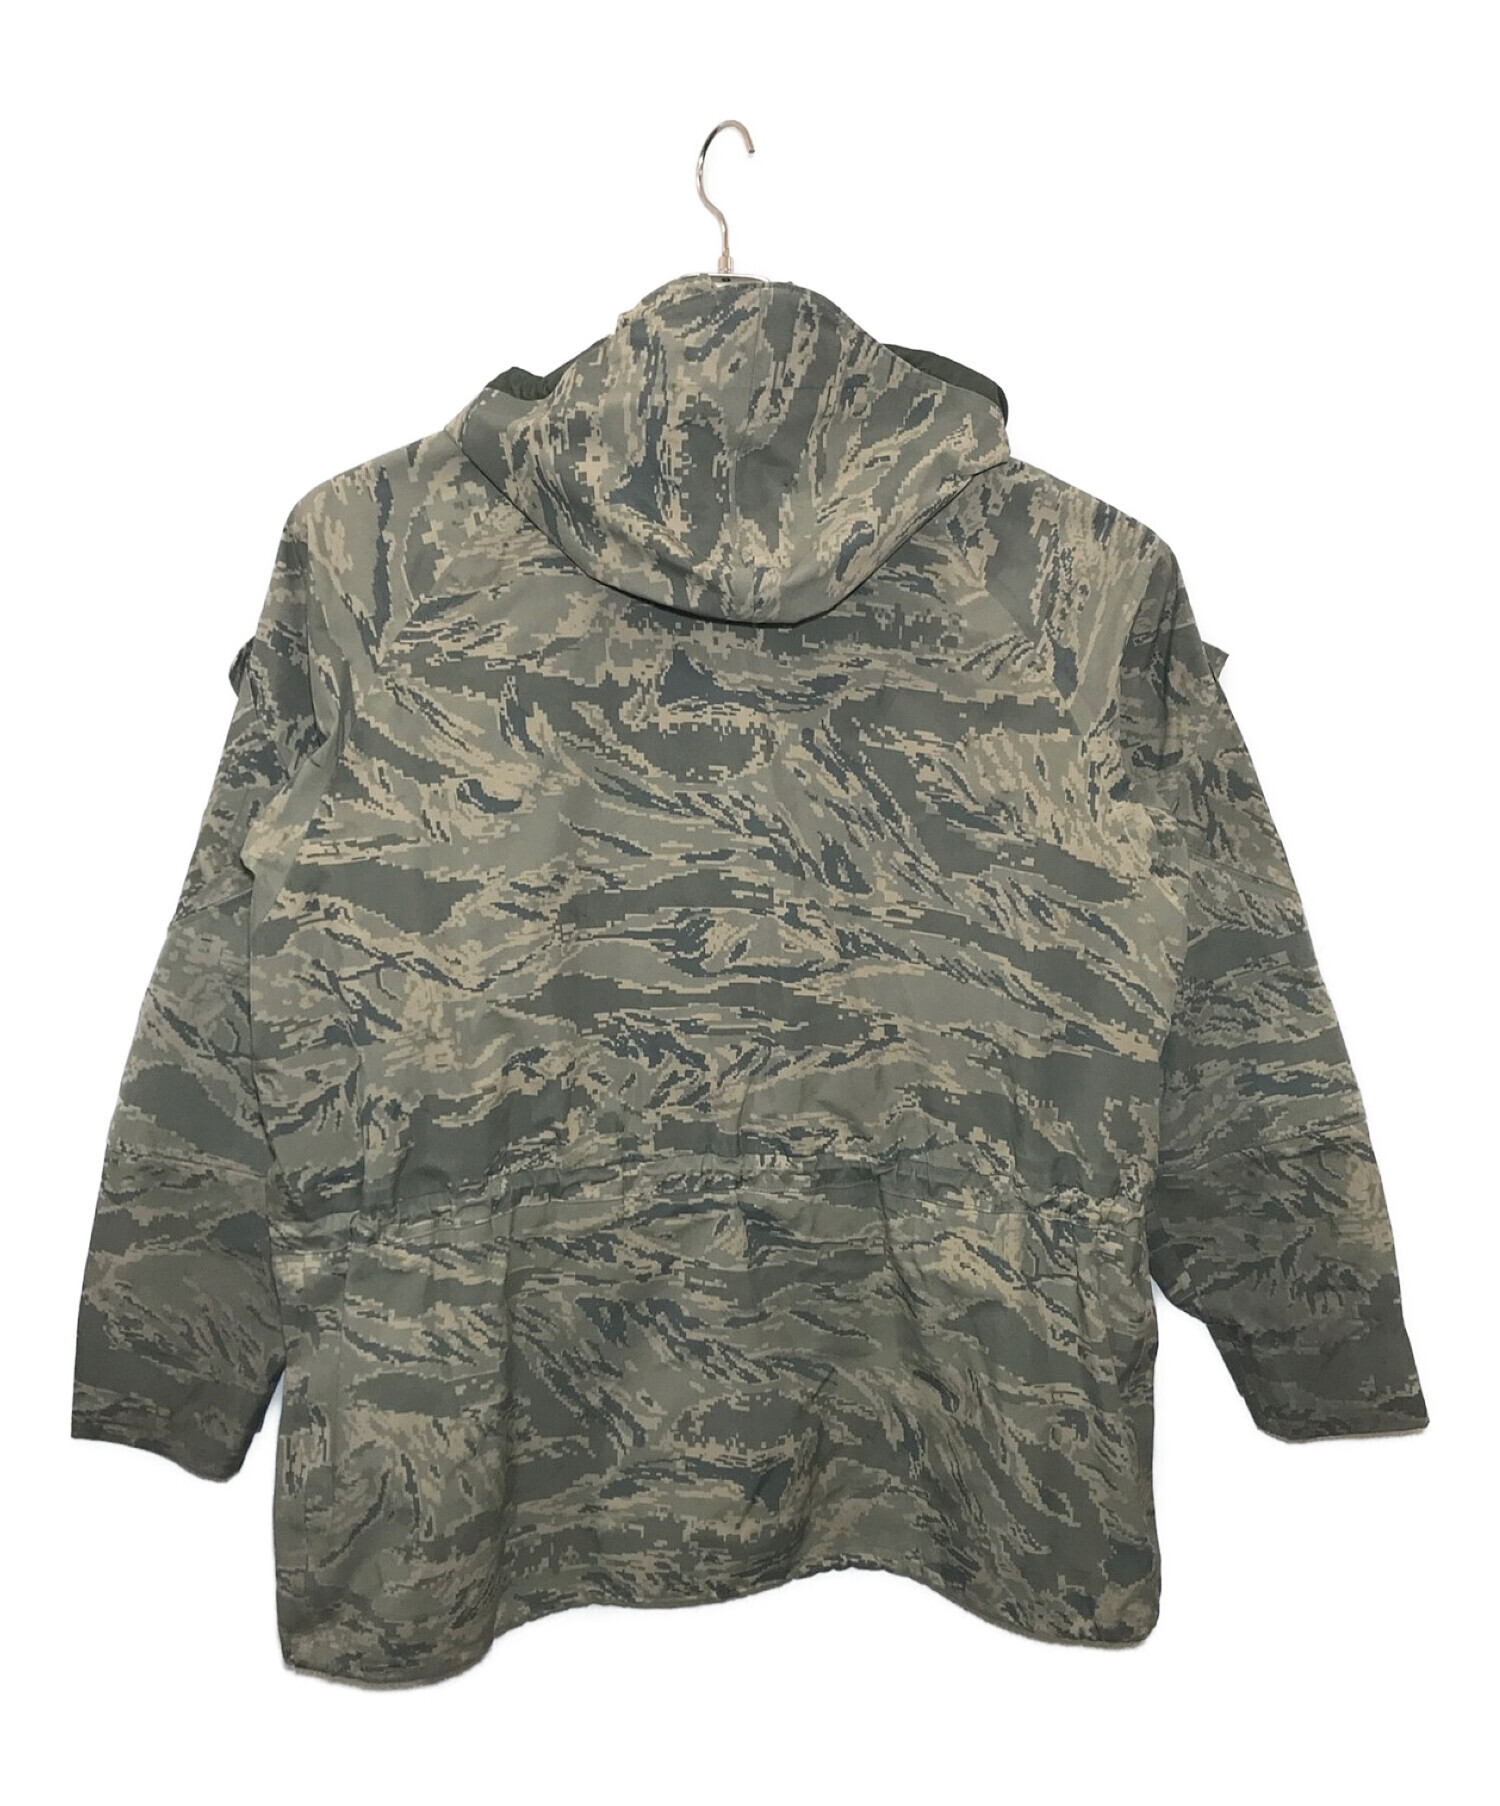 US ARMY (ユーエス アーミー) タイガーストライプミリタリージャケット オリーブ サイズ:L